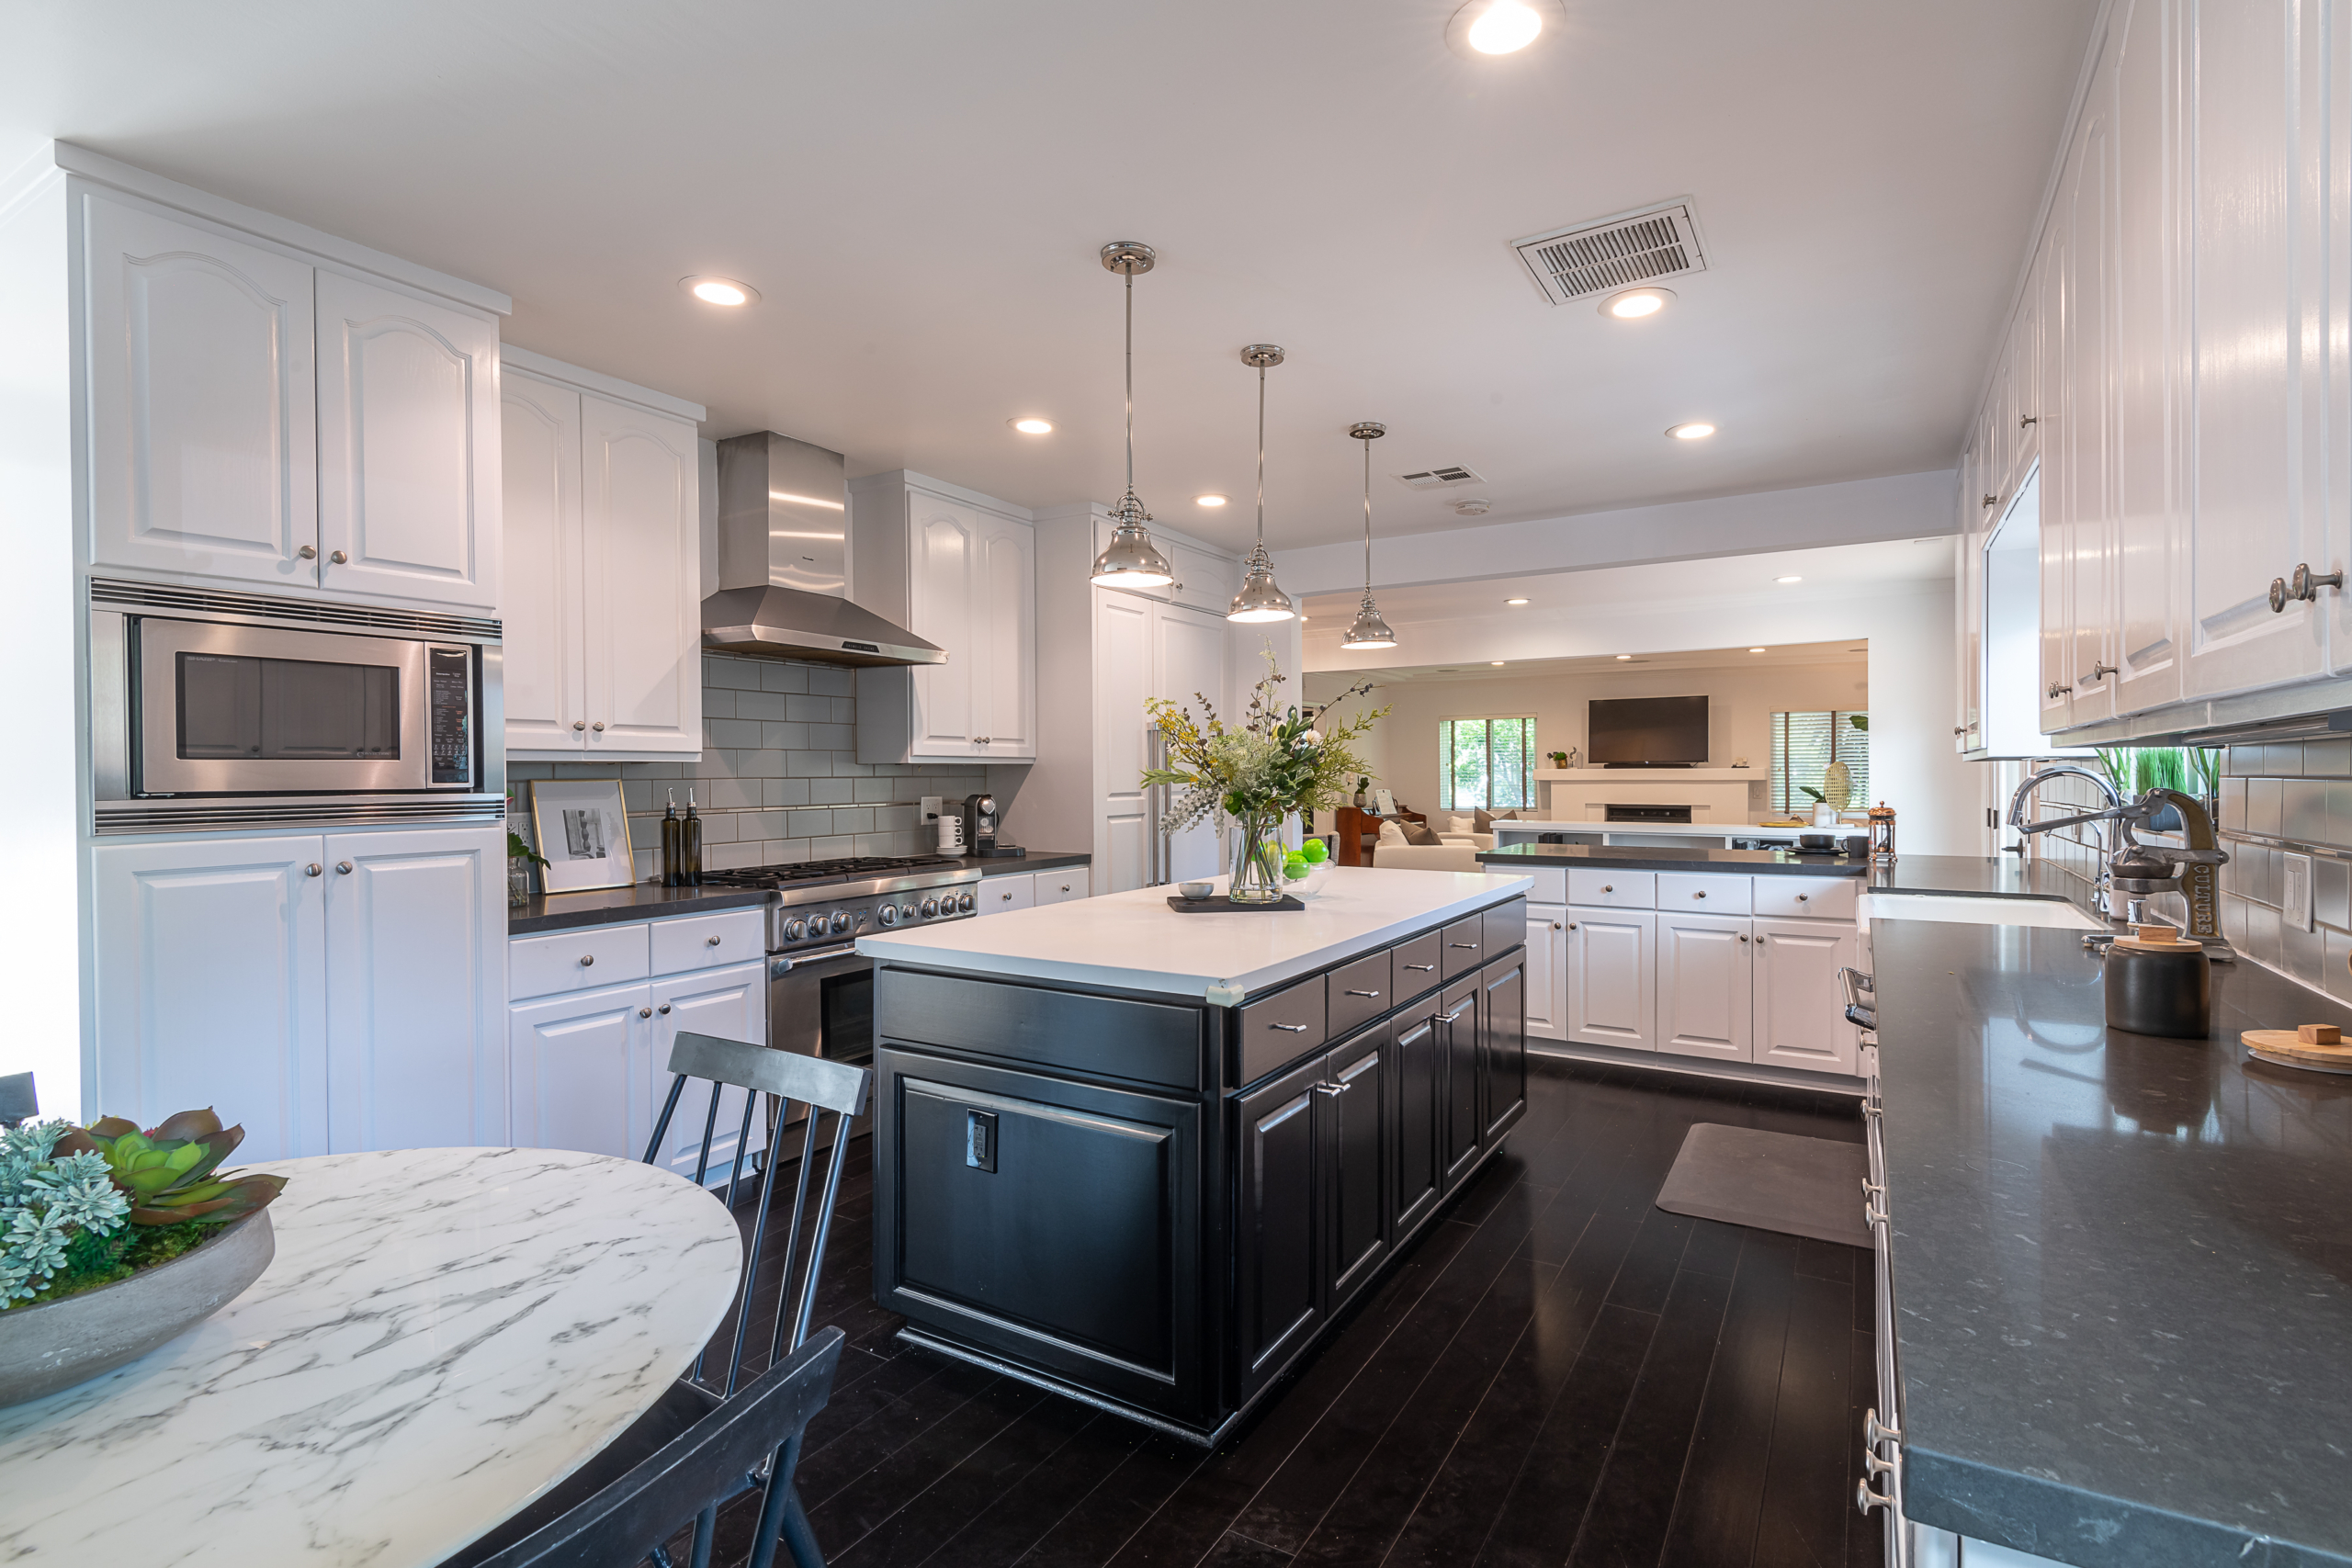 Stunning bright white kitchen with dark cabinets on island and grey granite countertops